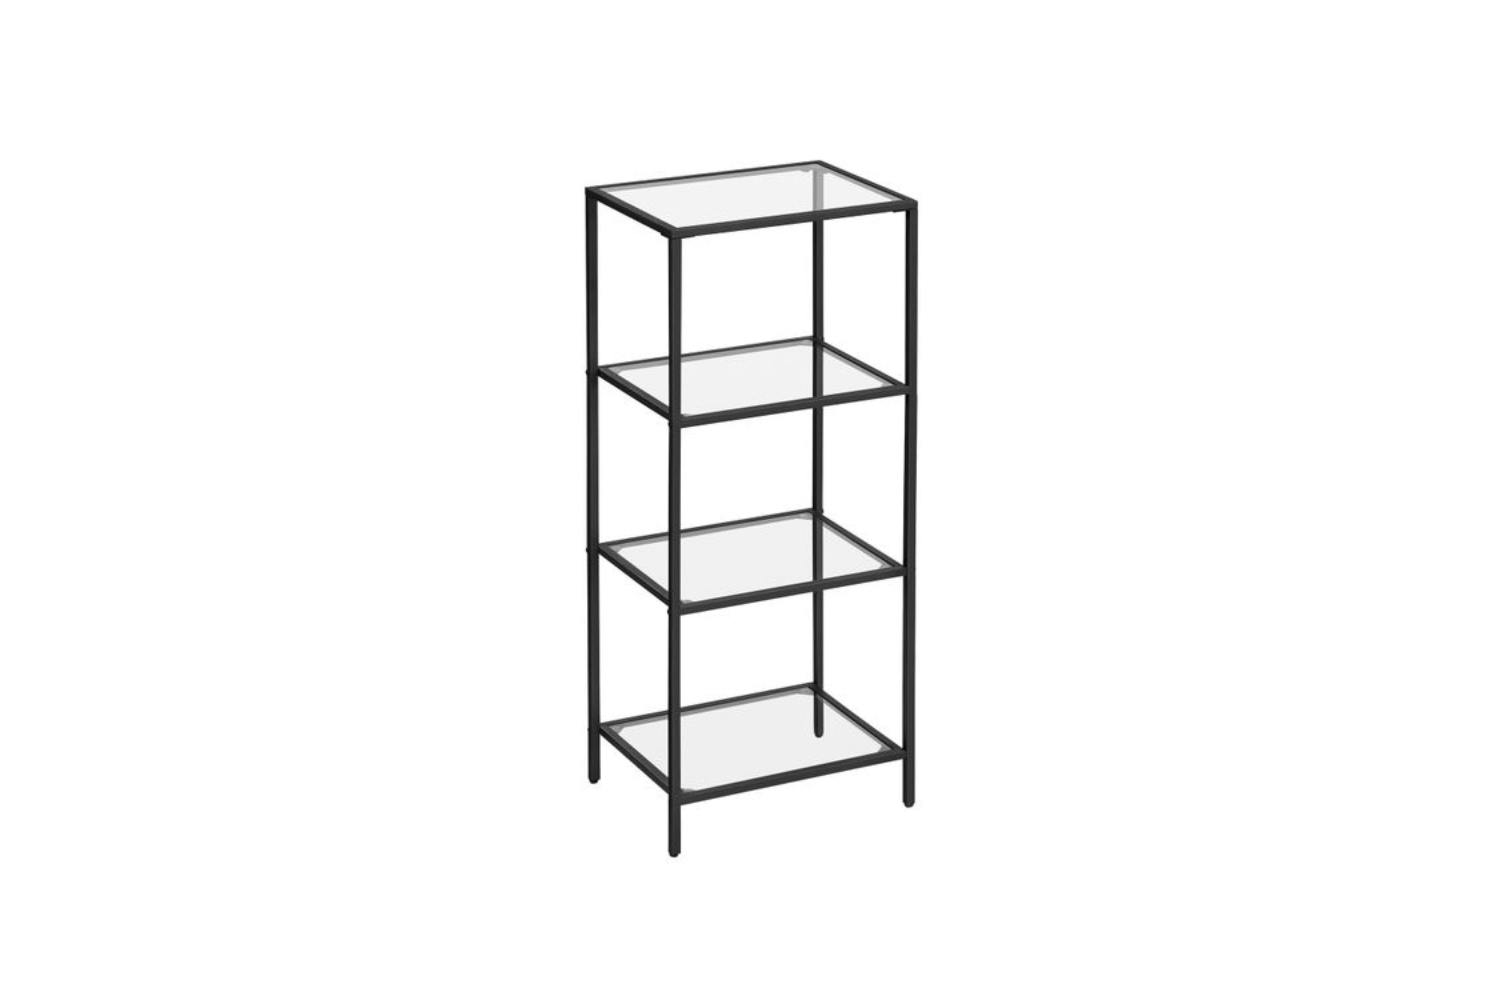 Vasagle LGT028B61 Standing Shelf with 4 Shelves Made of Black Tempered Glass